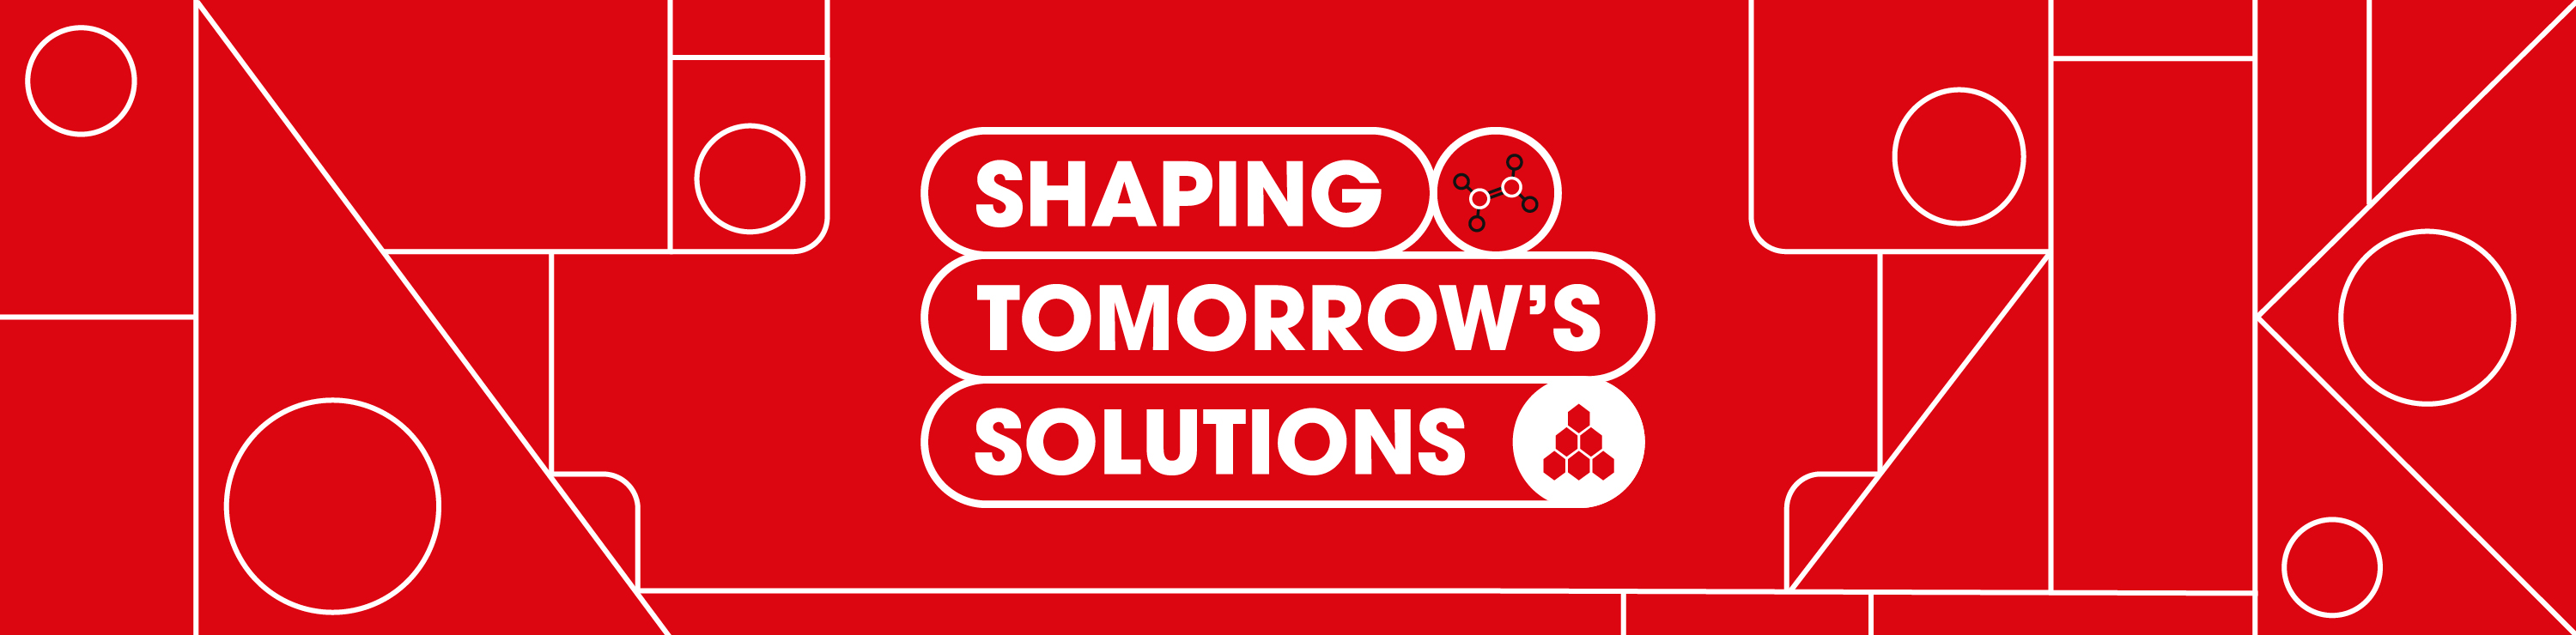 Shaping tomorrow's solutions logo